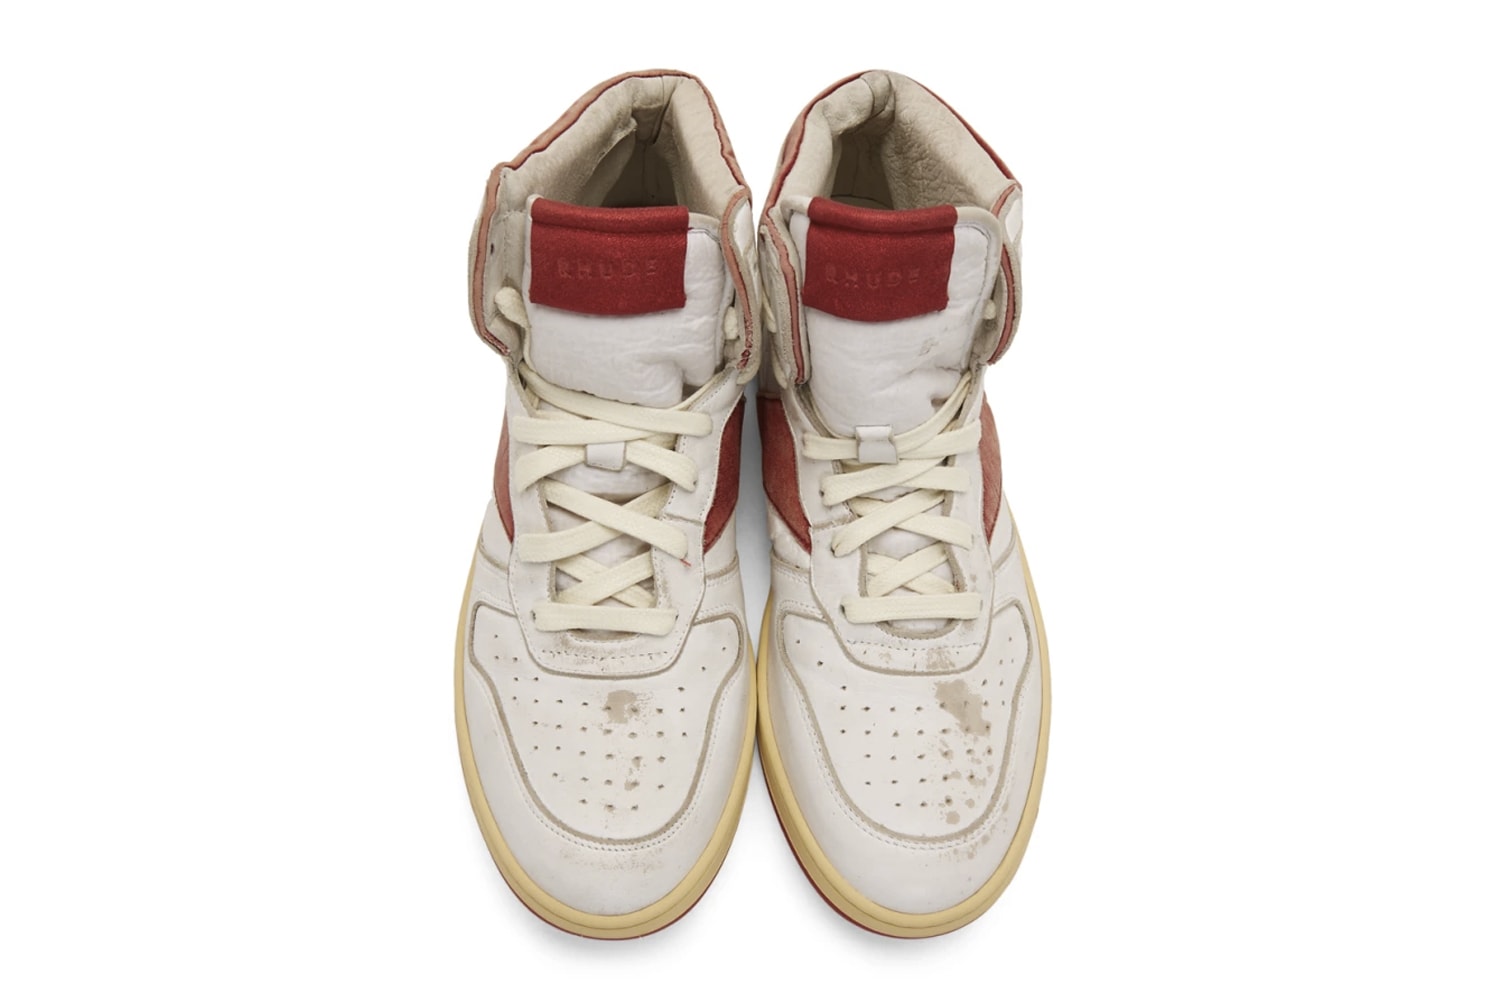 RHUDE Retro Bball-Hi Sneakers White Red Release Info Date Pricing Buy Rhuigi rhuigi villasenor Distressed